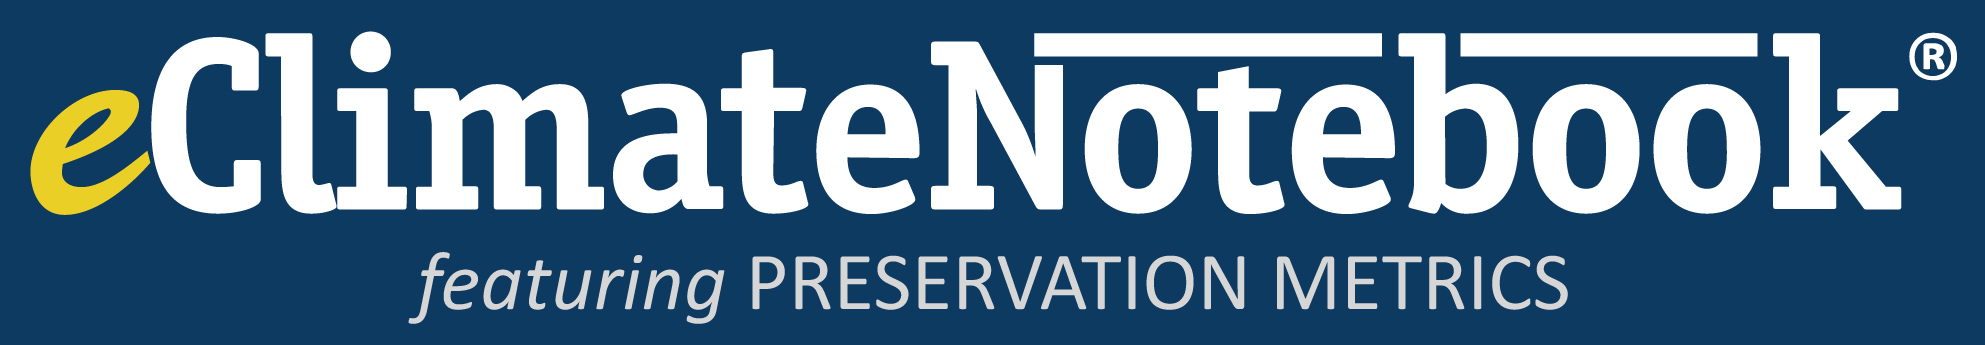 eClimateNotebook logo and featuring preservation metrics tagline lockup